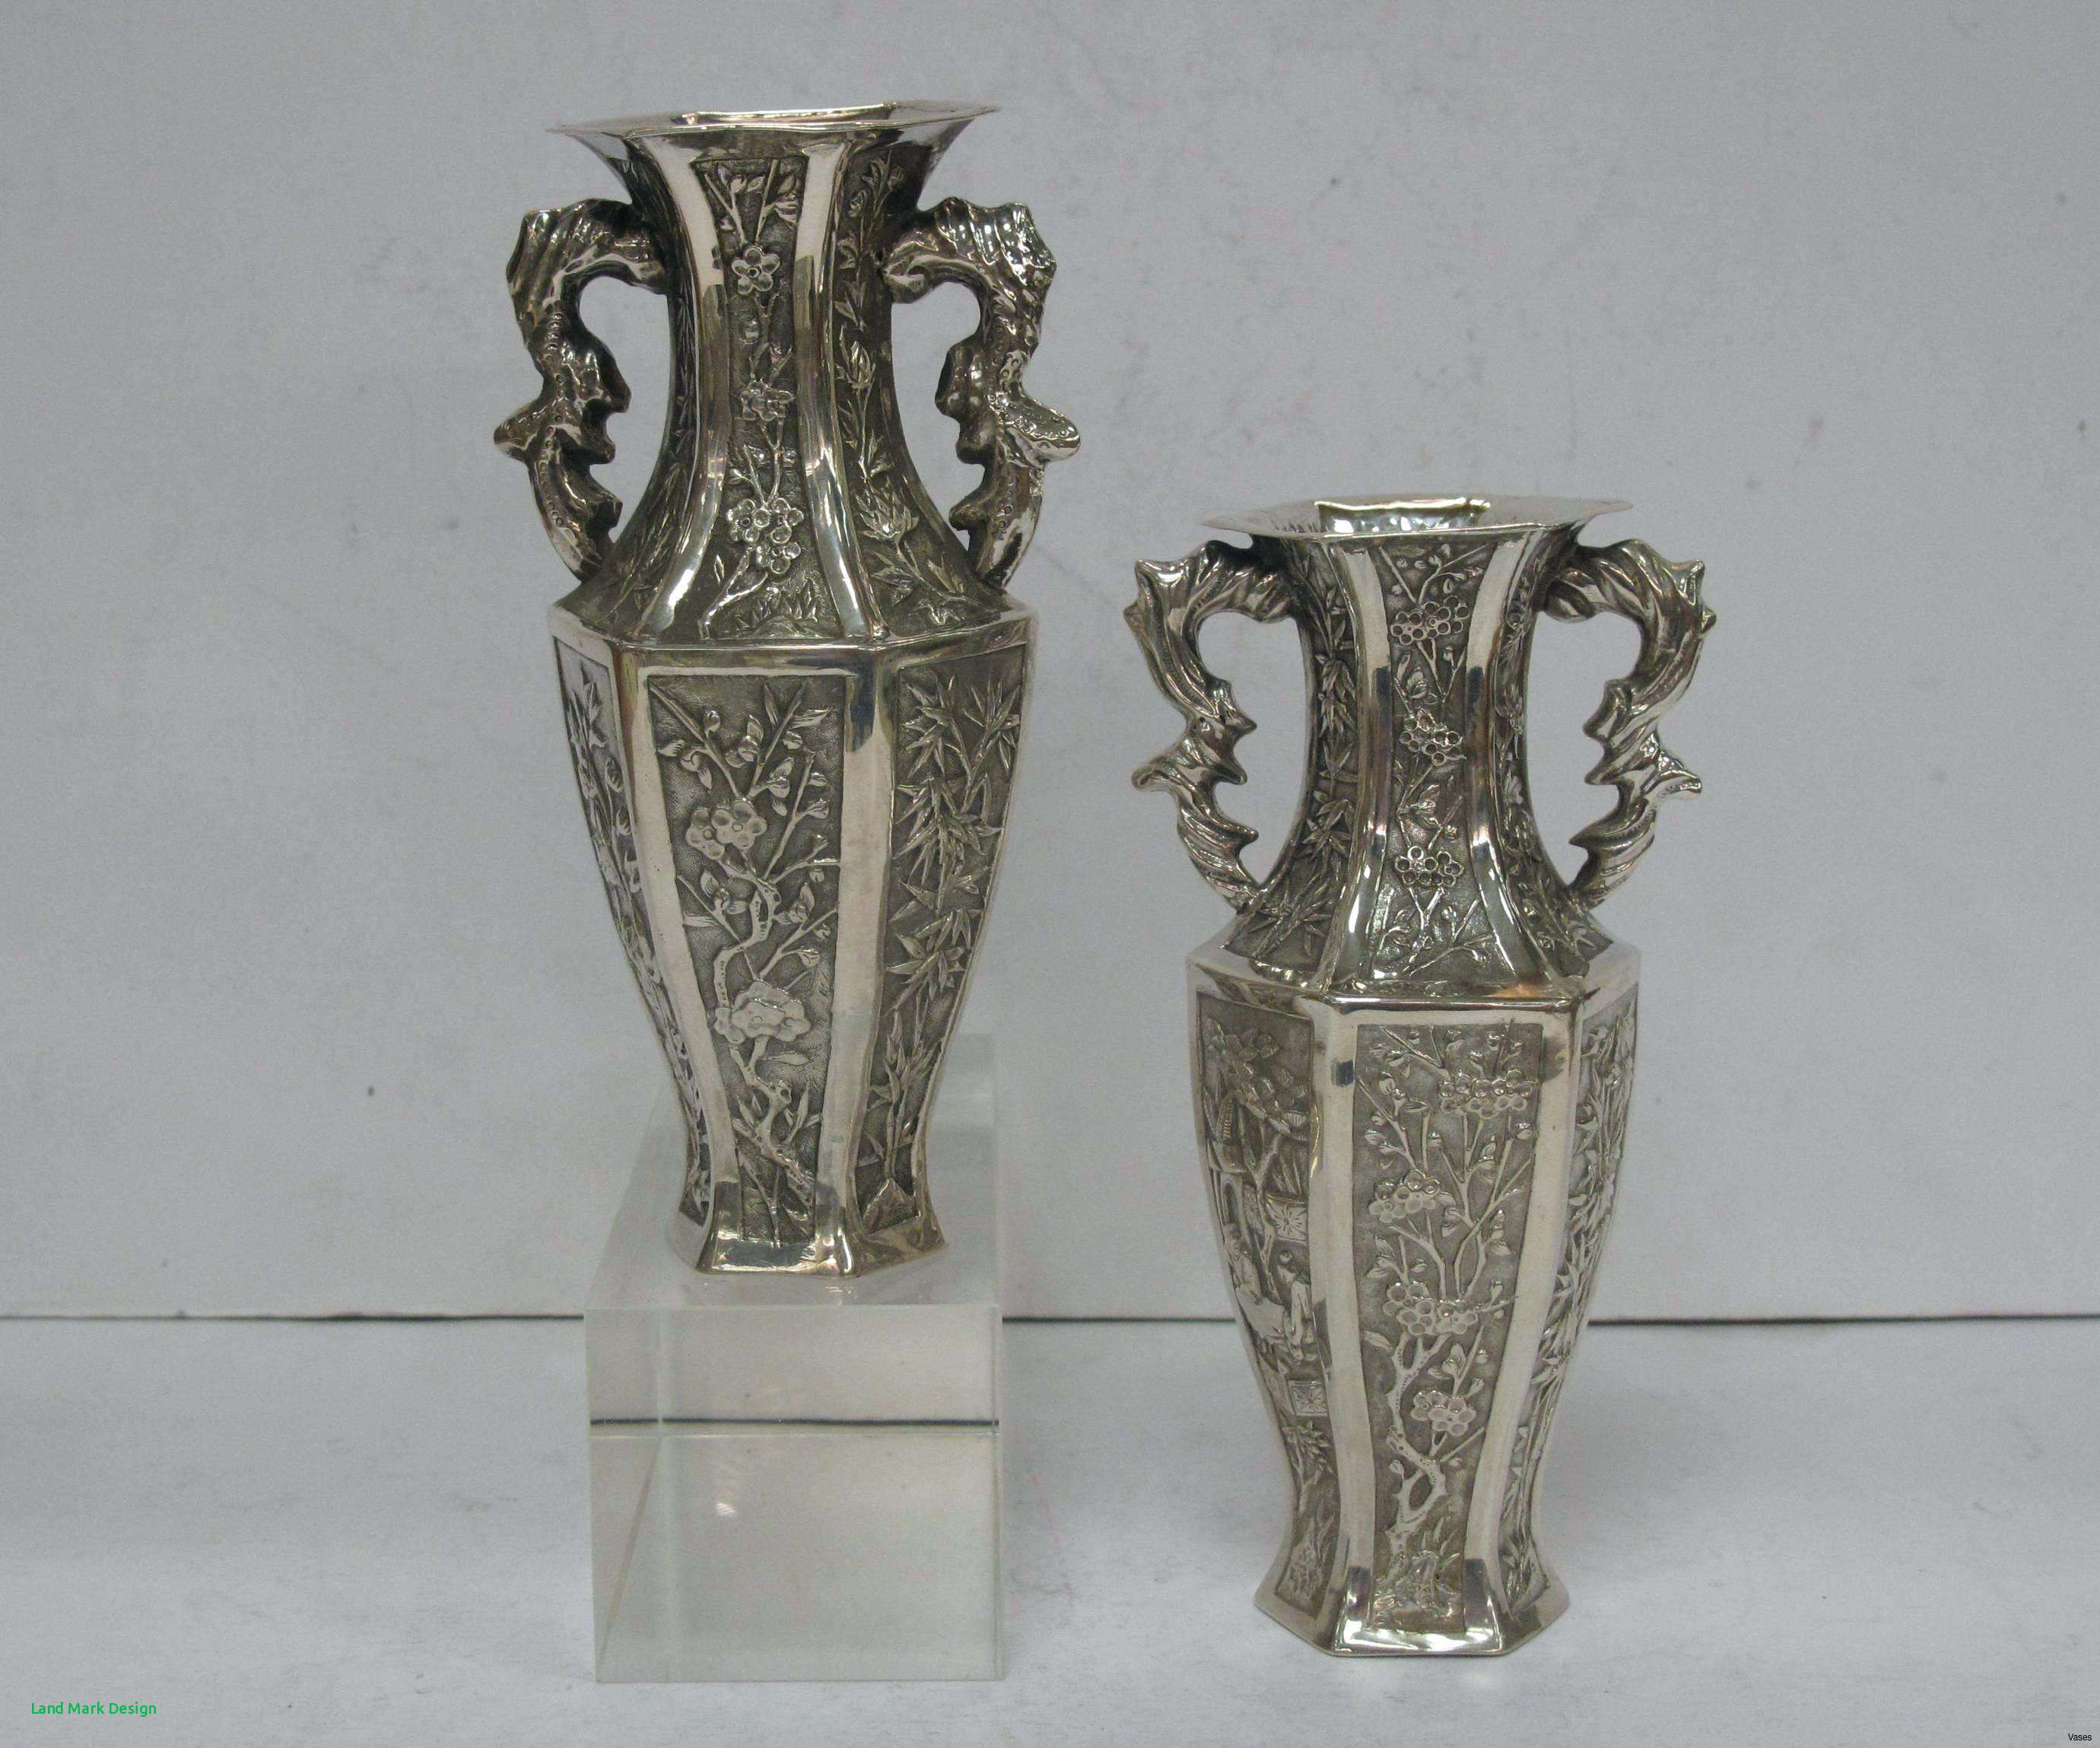 cheap blue vases in bulk of 15 best of square vases in bulk bogekompresorturkiye com regarding 8253h vases bulk silver square glass cube vase with metallic band 6x6i 0d vases bulk silver